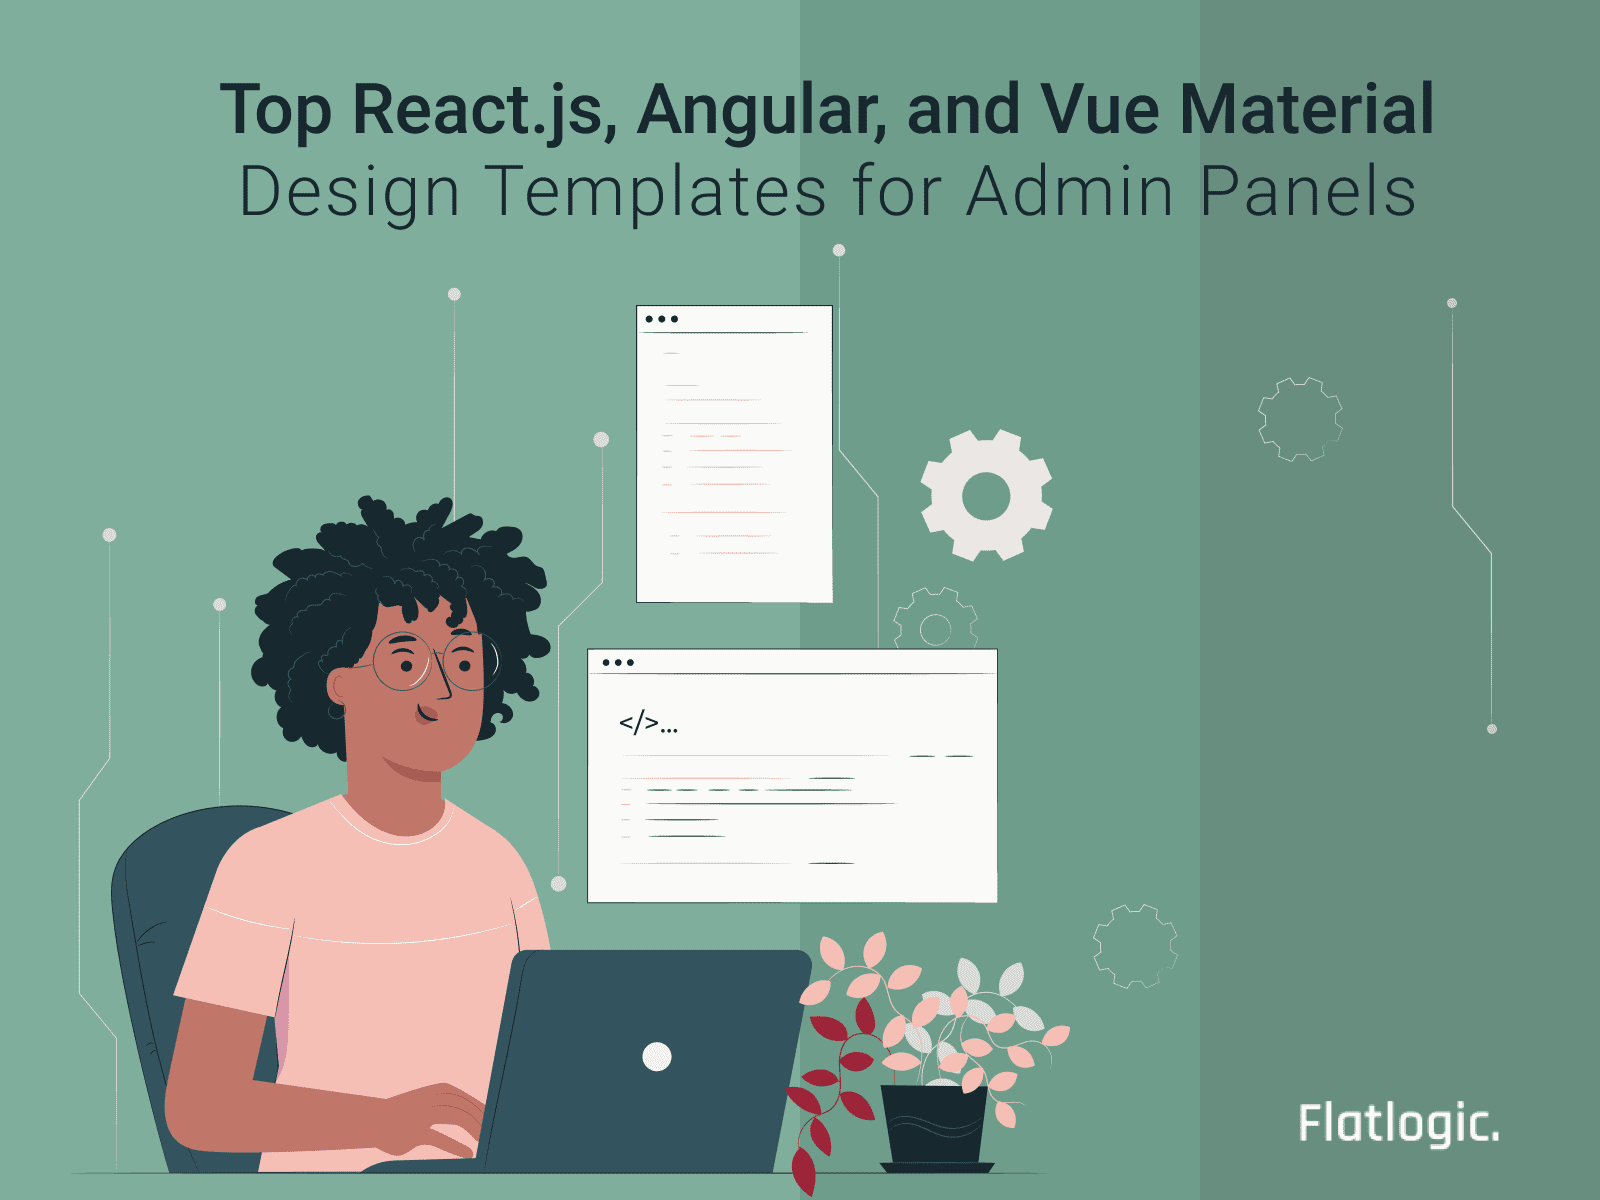 Top 7 React.js, Angular, and Vue Material Design Templates for Admin Panels